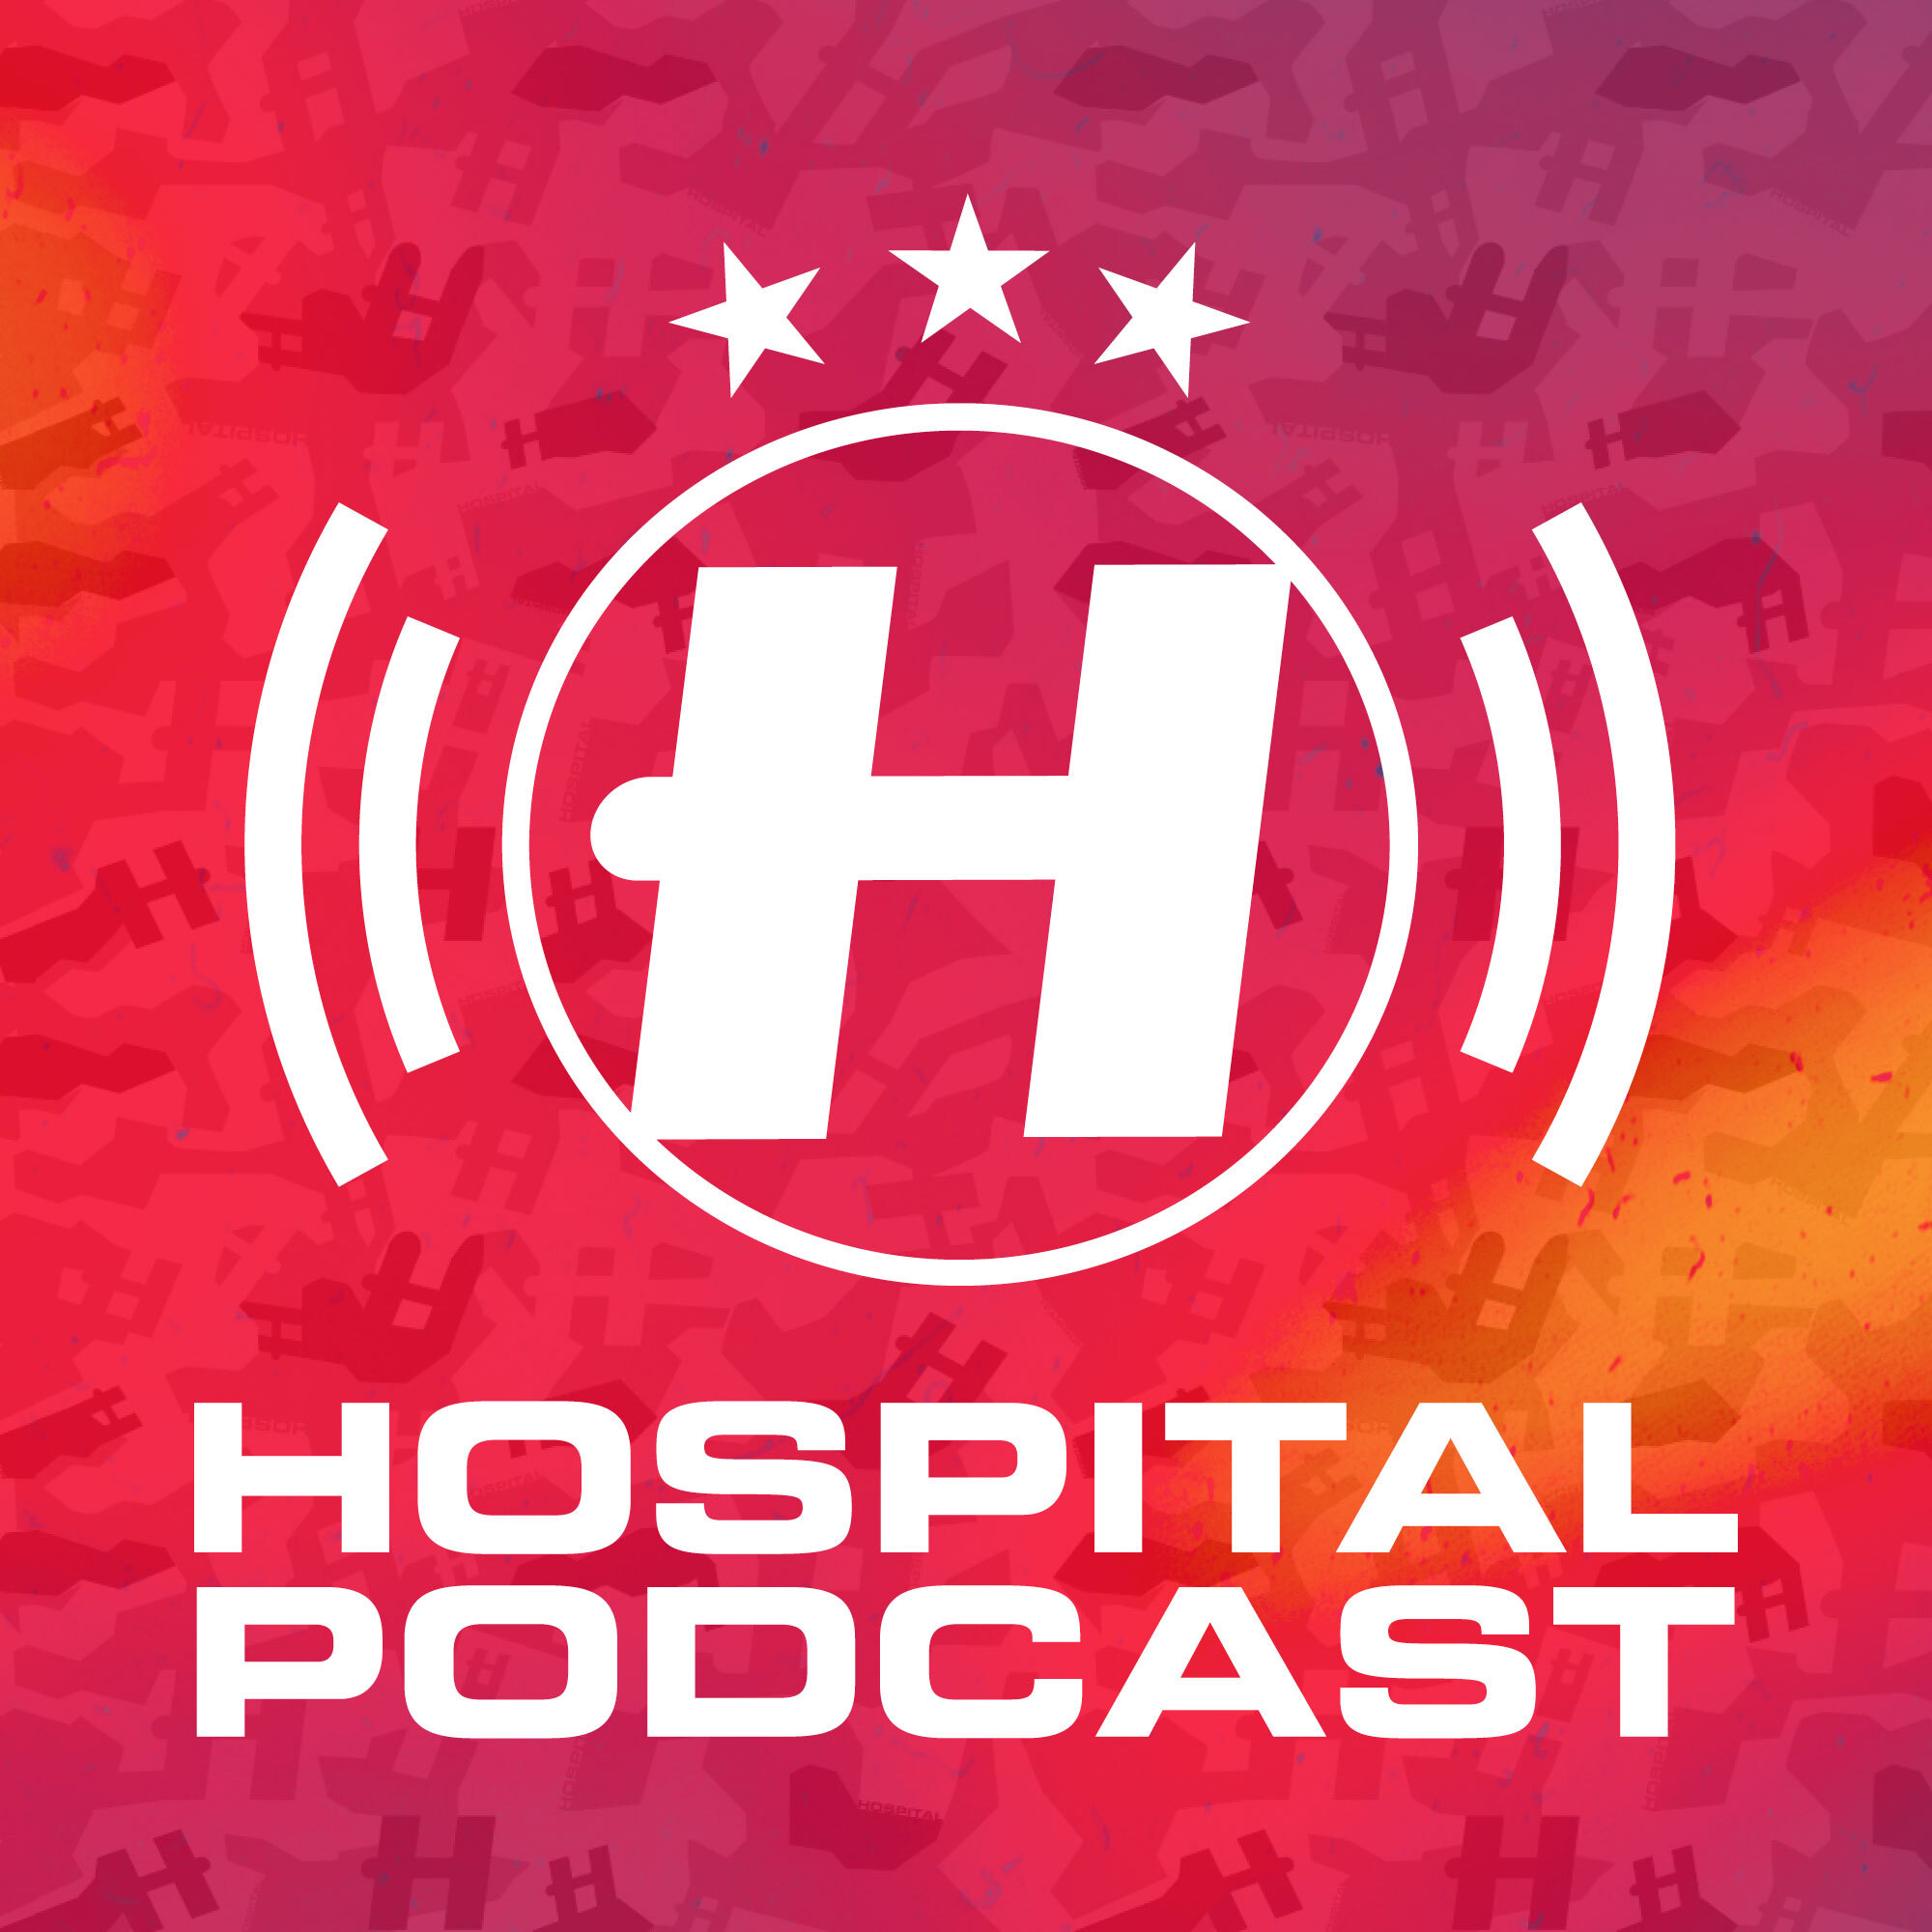 Hospital Podcast 393 with London Elektricity Artwork